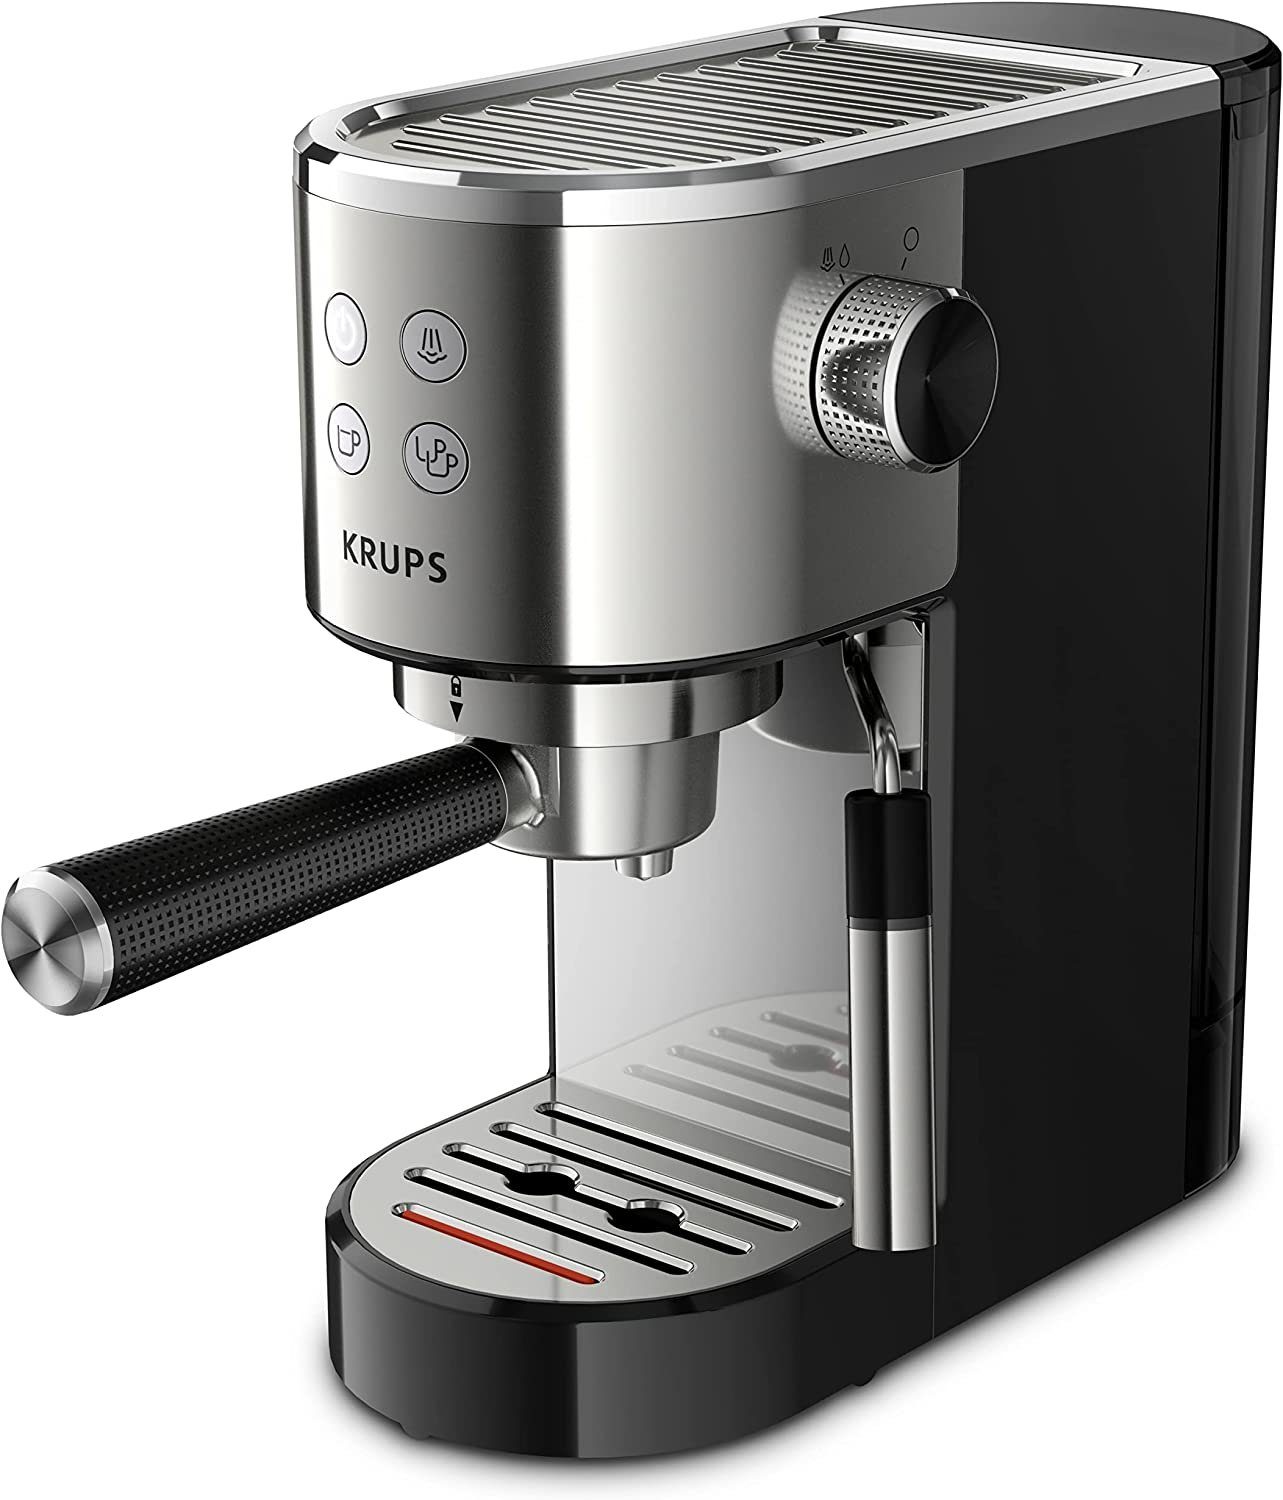 Edelstahl, Bar geeignet Espressomaschine Krups Milchschaumdüse Abschaltung, ESE 1l XP442C, Kaffeekanne, Tamper, 15 Kaffeepads Filtereinsatz automatischer +